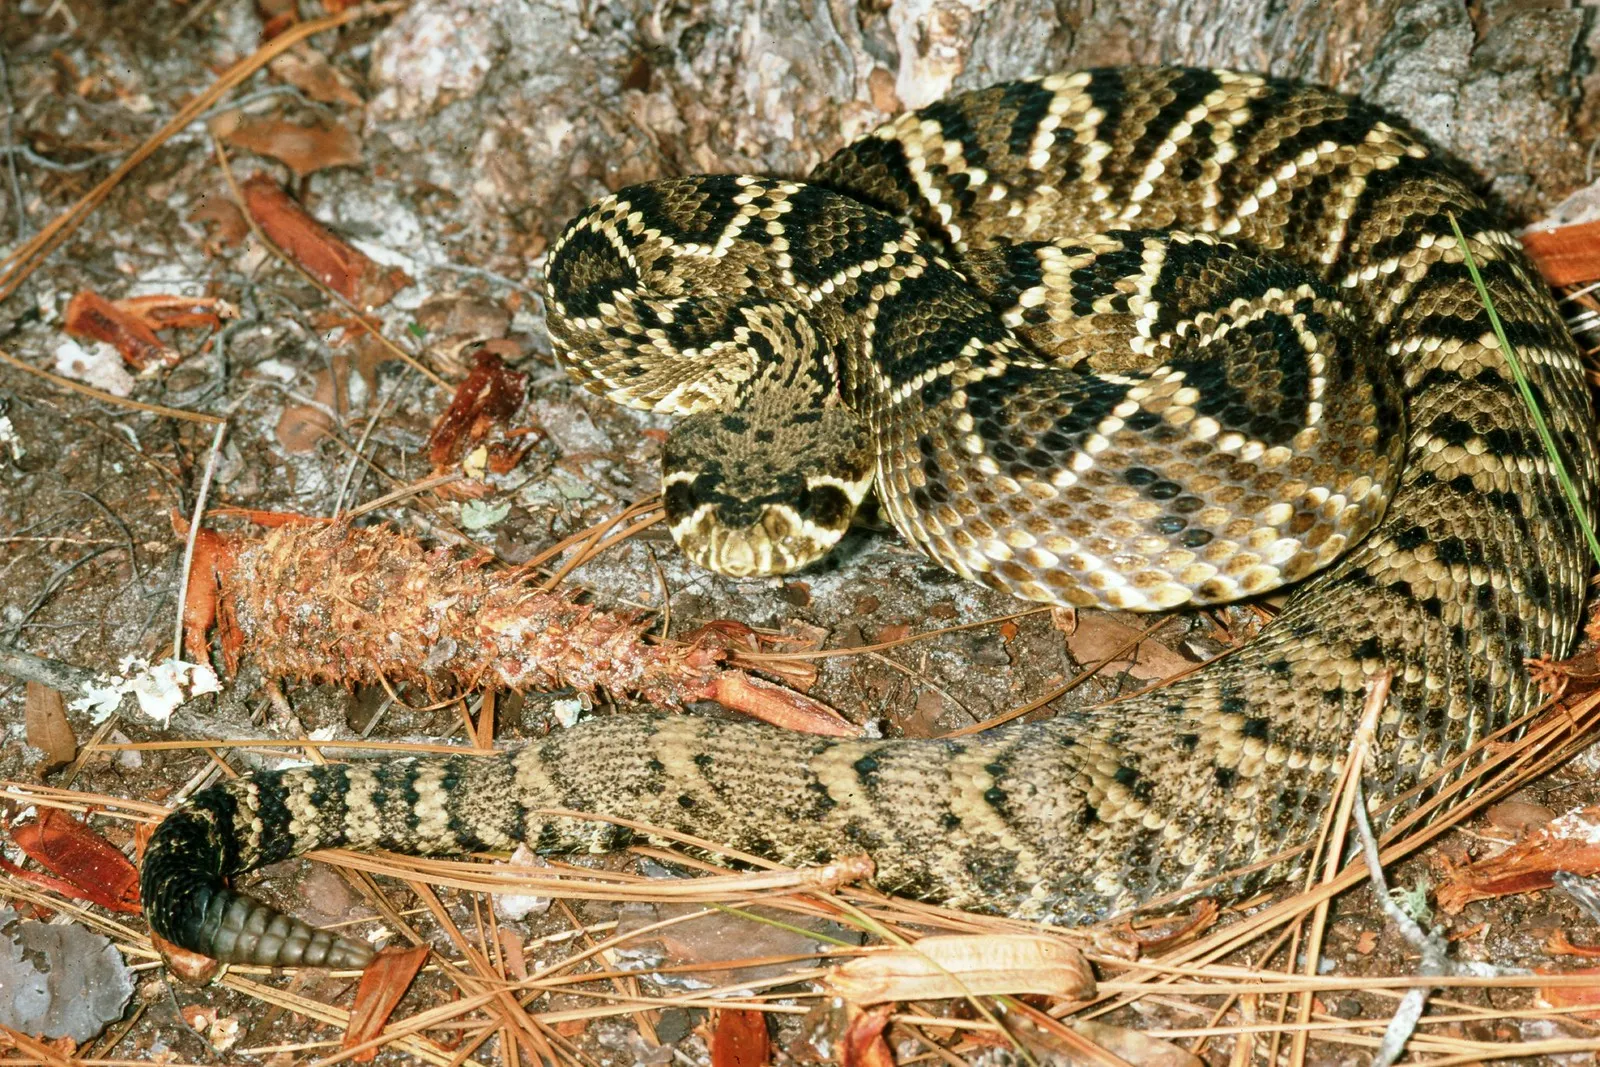 Eastern Diamondback Rattlesnake Facts